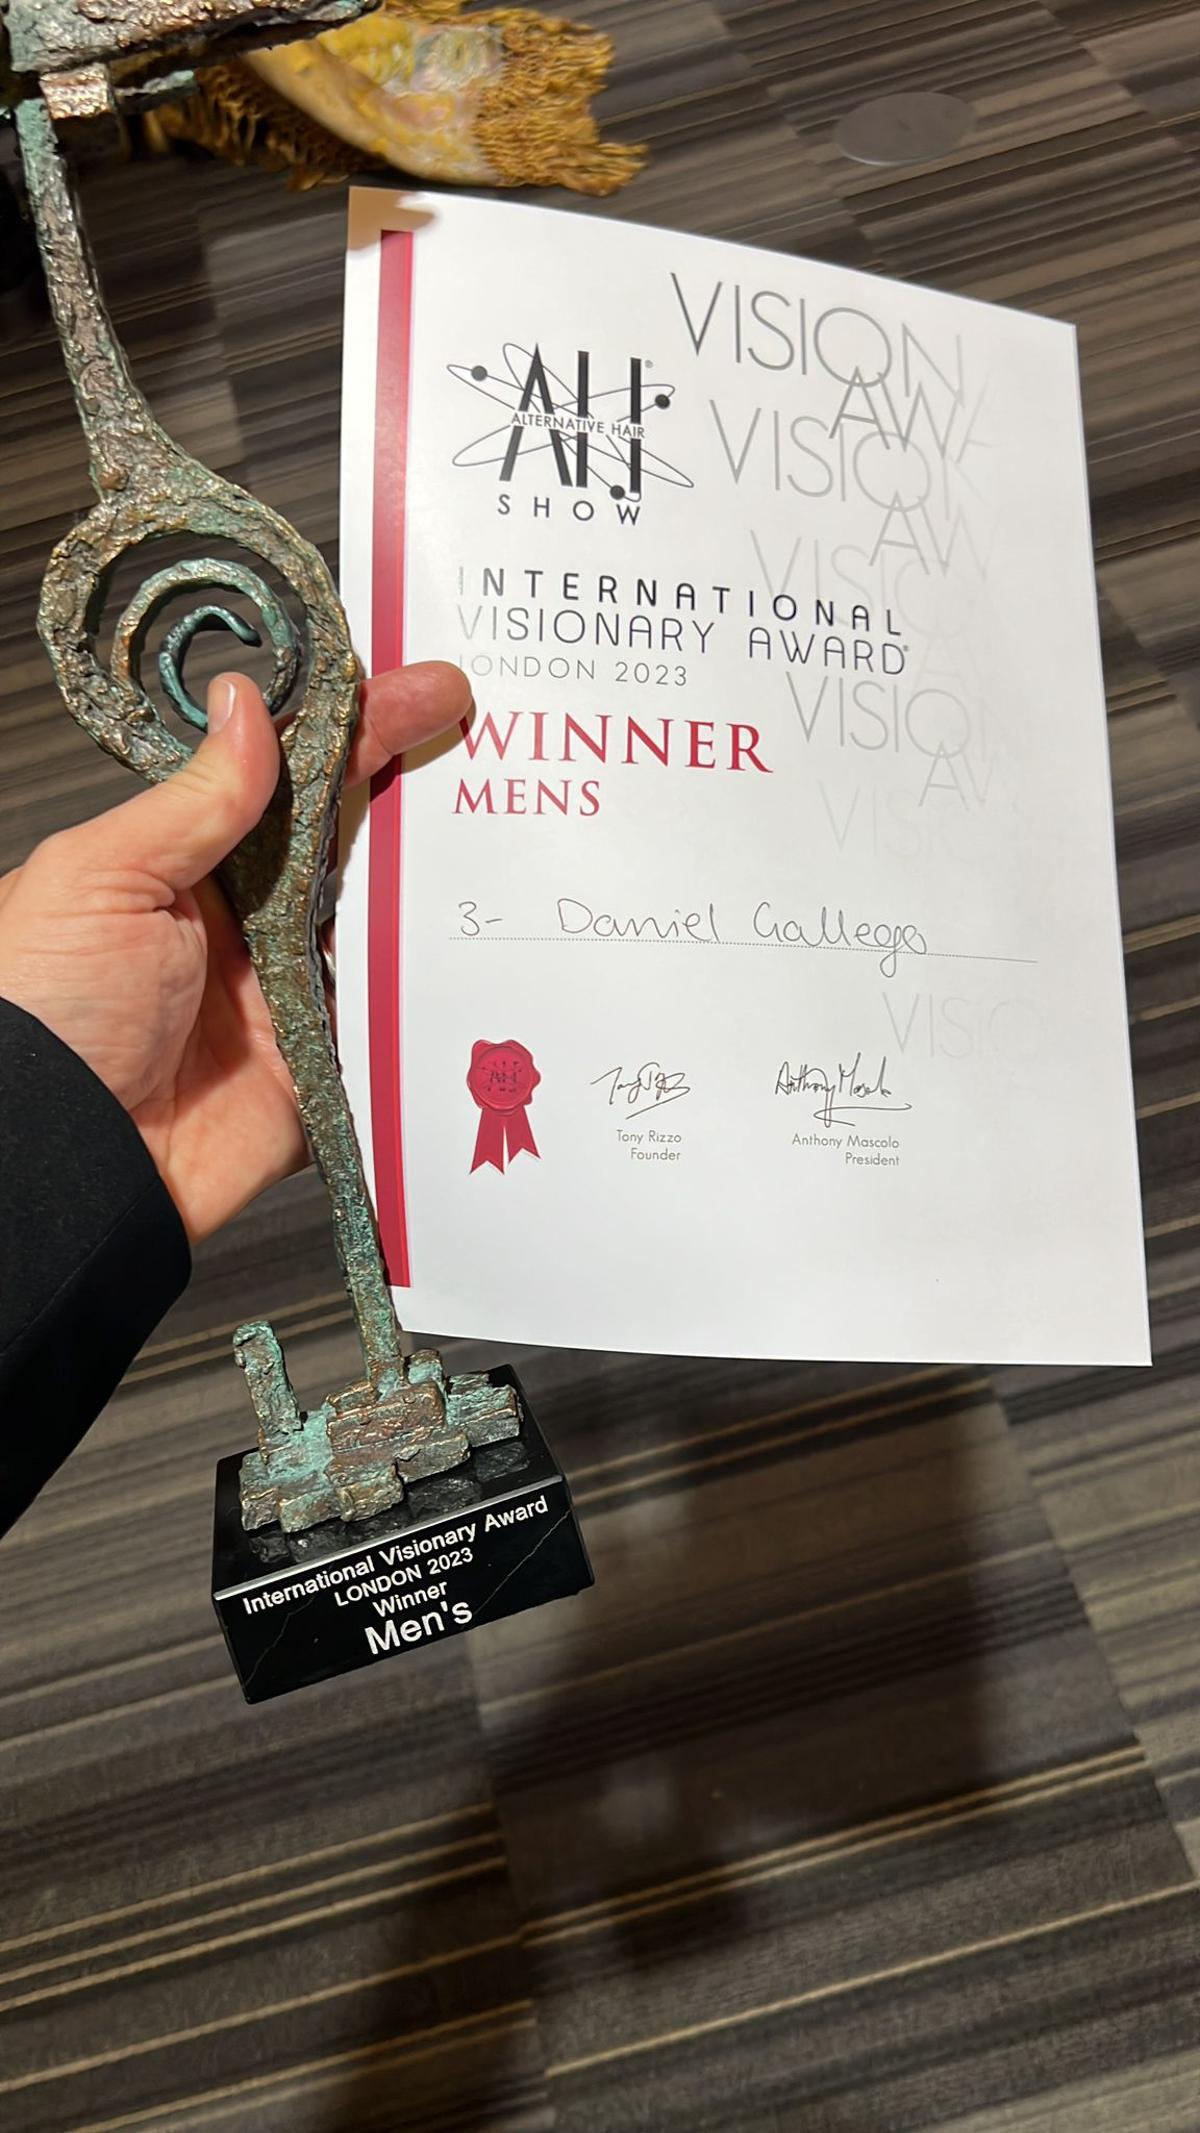 El peluquero Daniel Gallego gana los International Visionary Awards.